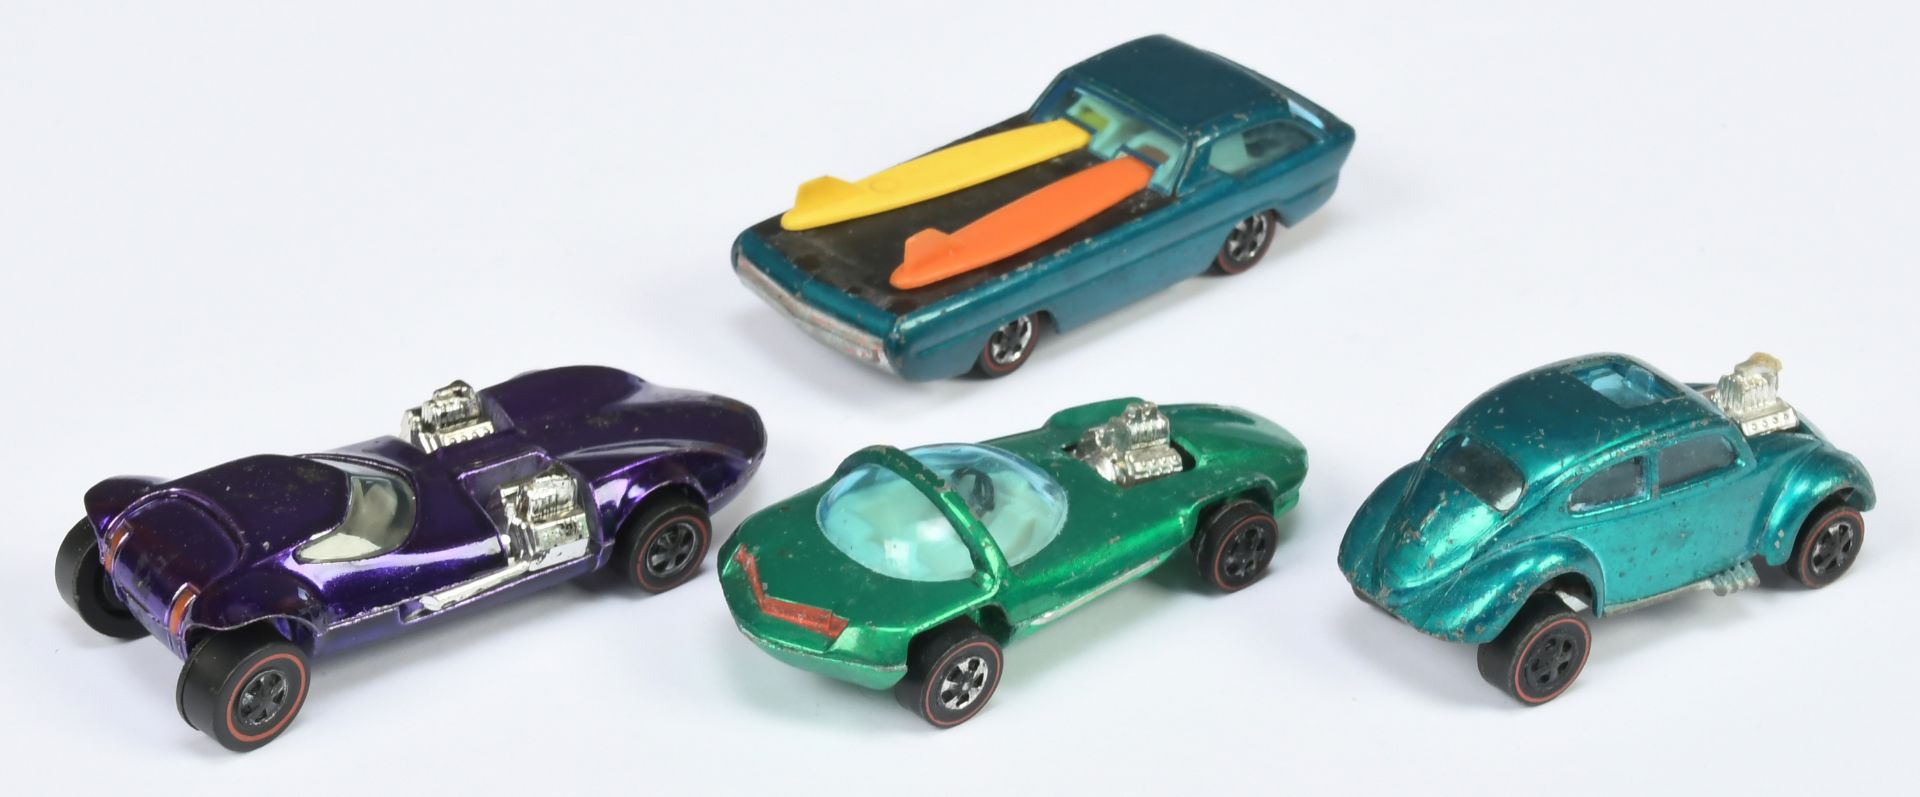 Mattel Hot Wheels Redline unboxed group (1) Deora - blue with surfboards (2) Custom Volkswagen - ... - Image 2 of 2